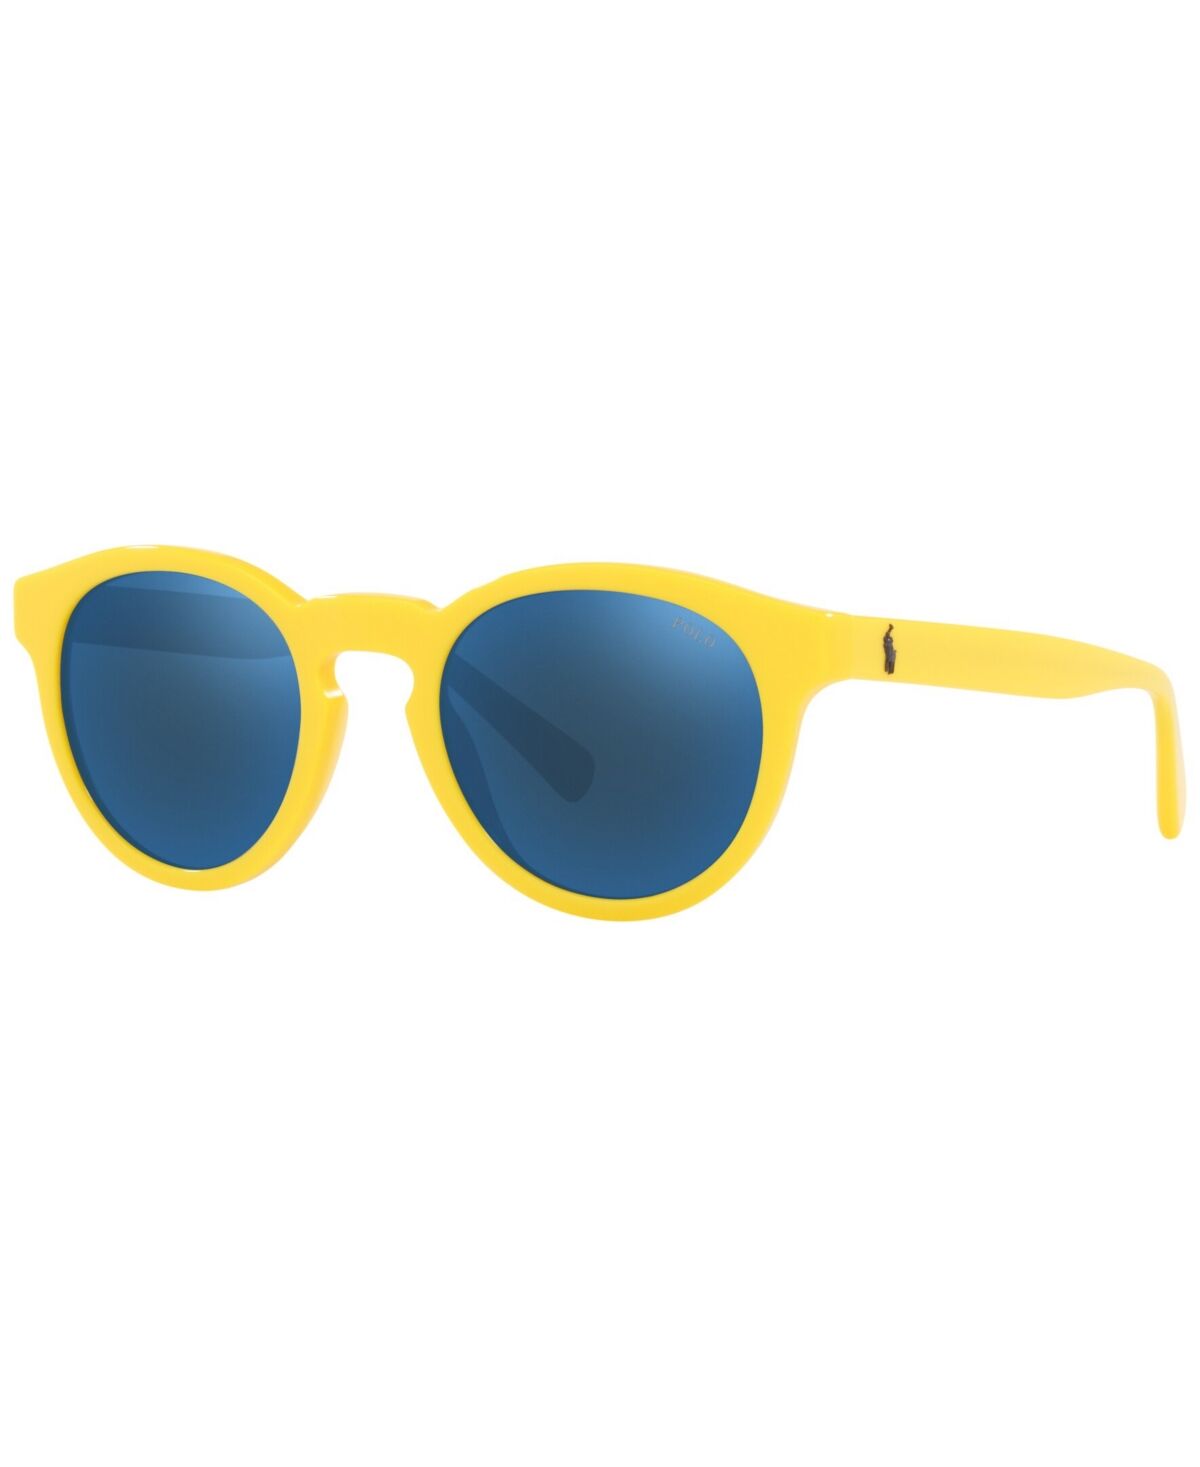 Ralph Lauren Polo Ralph Lauren Men's Sunglasses, PH4184 49 - Shiny Yellow